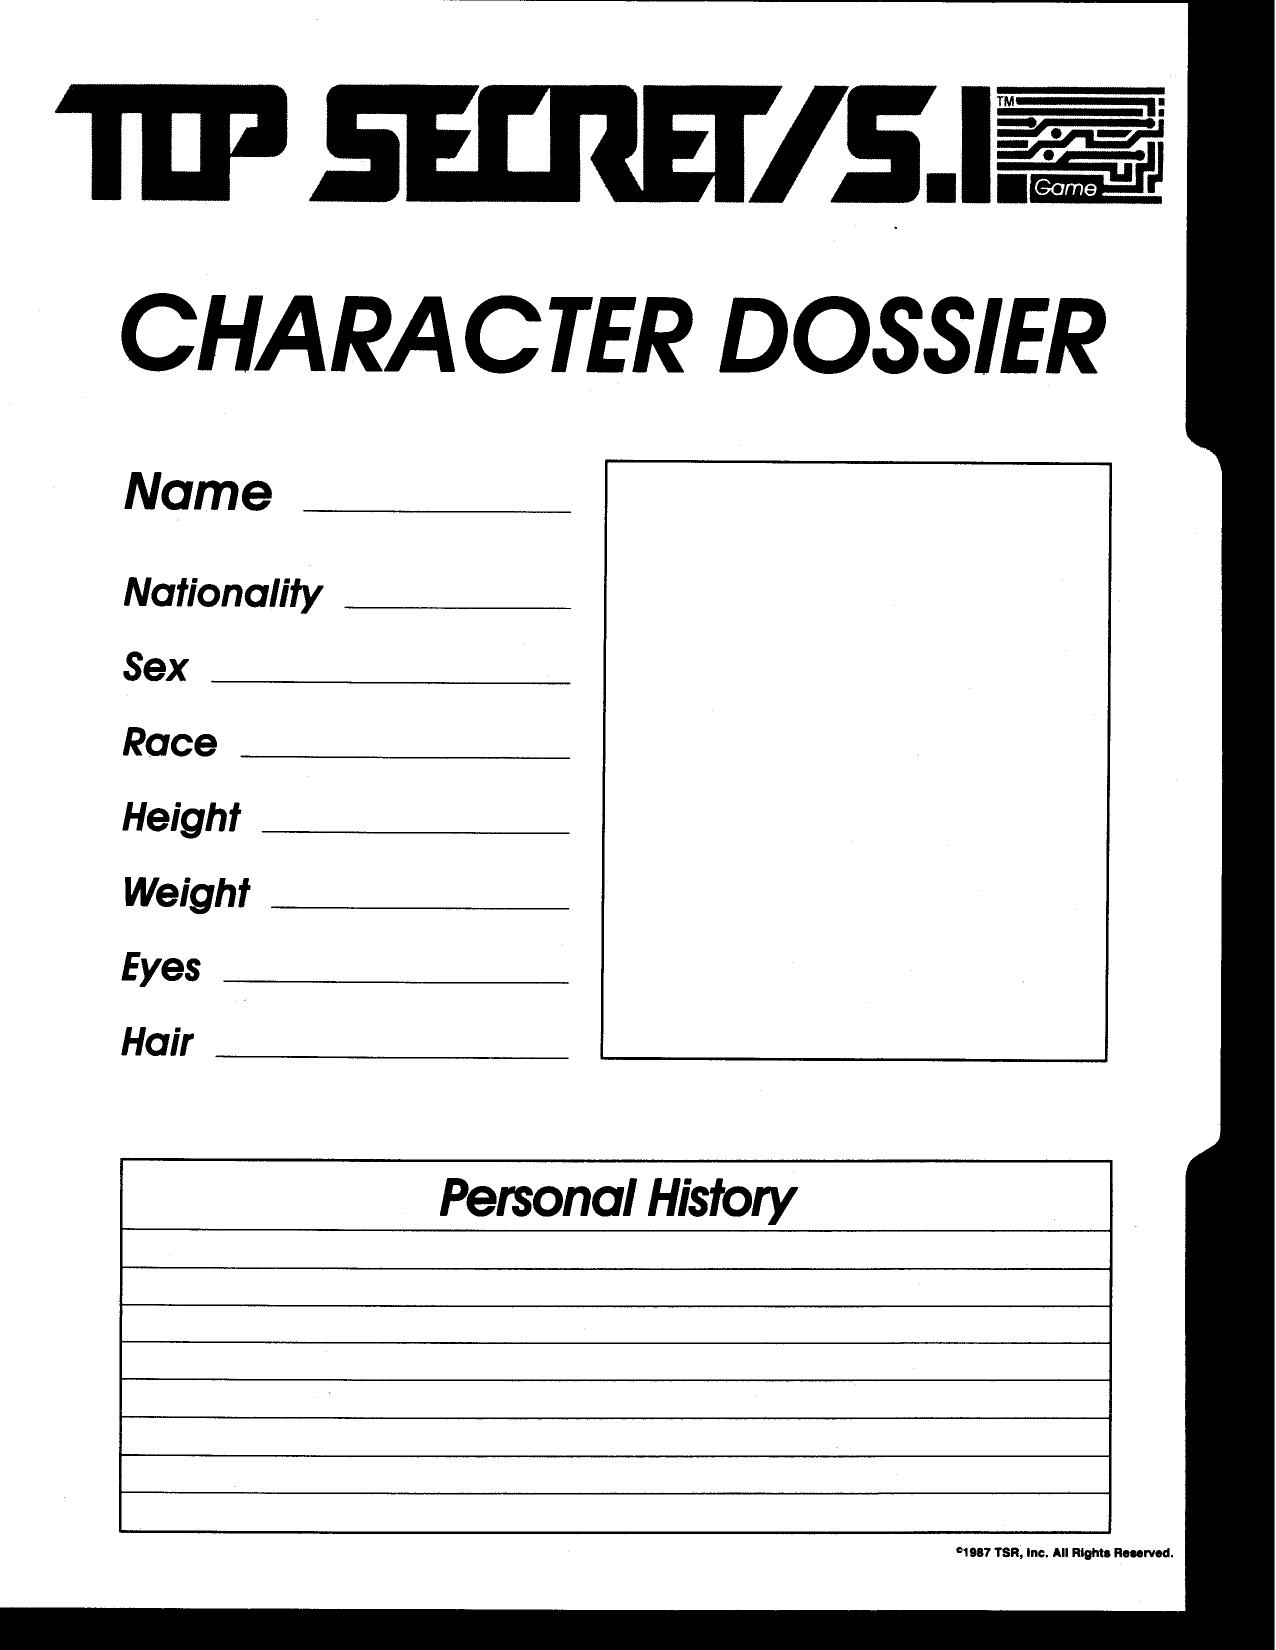 TSR-7620 Character Dossier